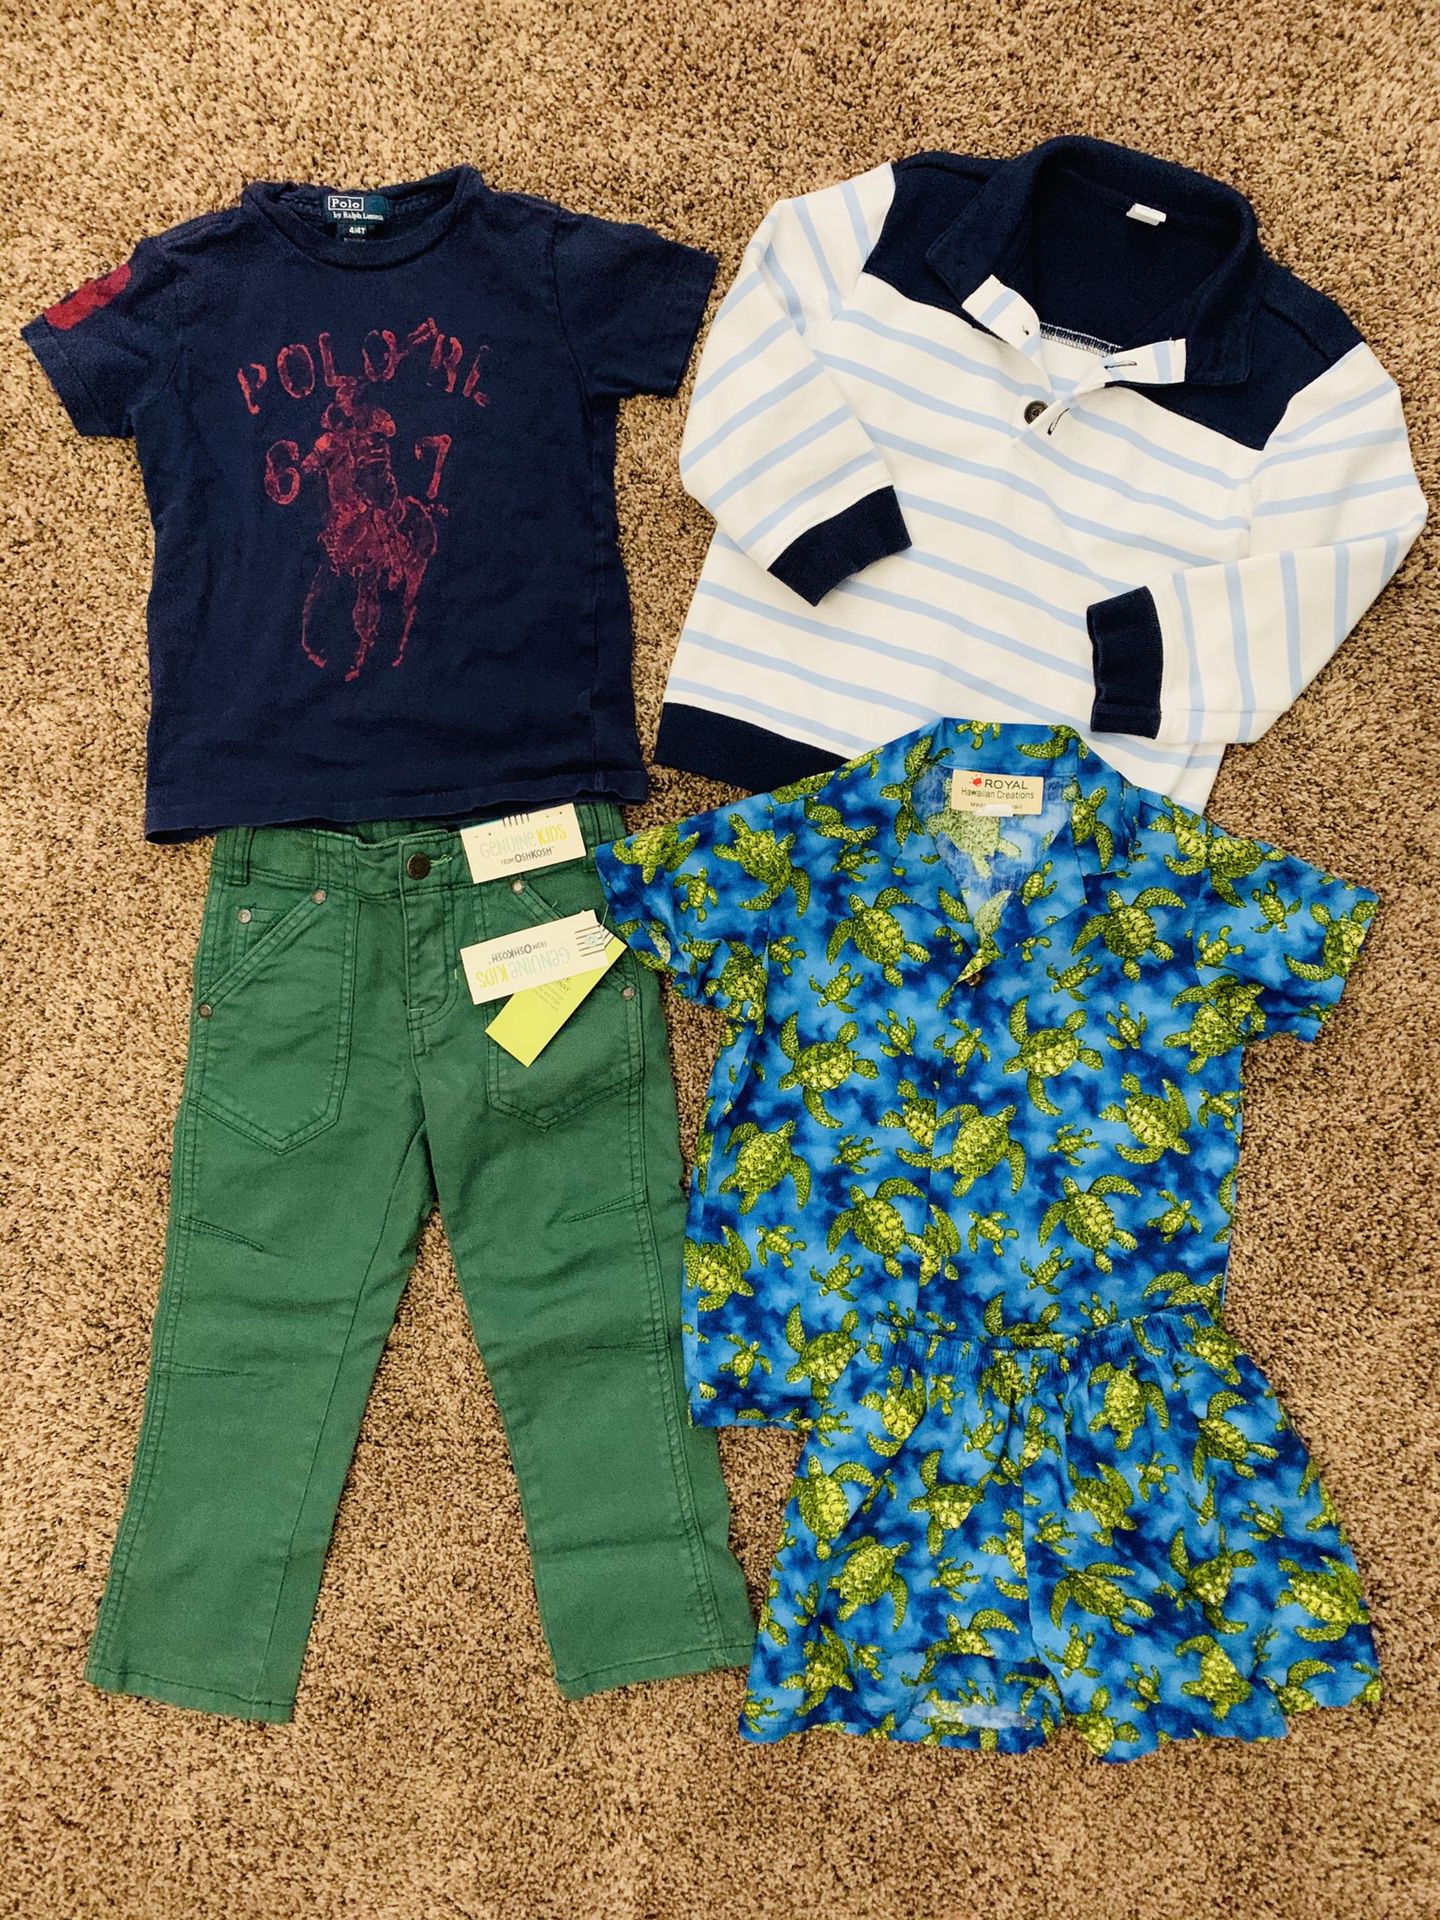 BOYS / KIDS 4T CLOTHES - OUTFITS - OSHKOSH PANTS RALPH POLO SHIRT HAWAIIAN SET ~ ALL FOR $5